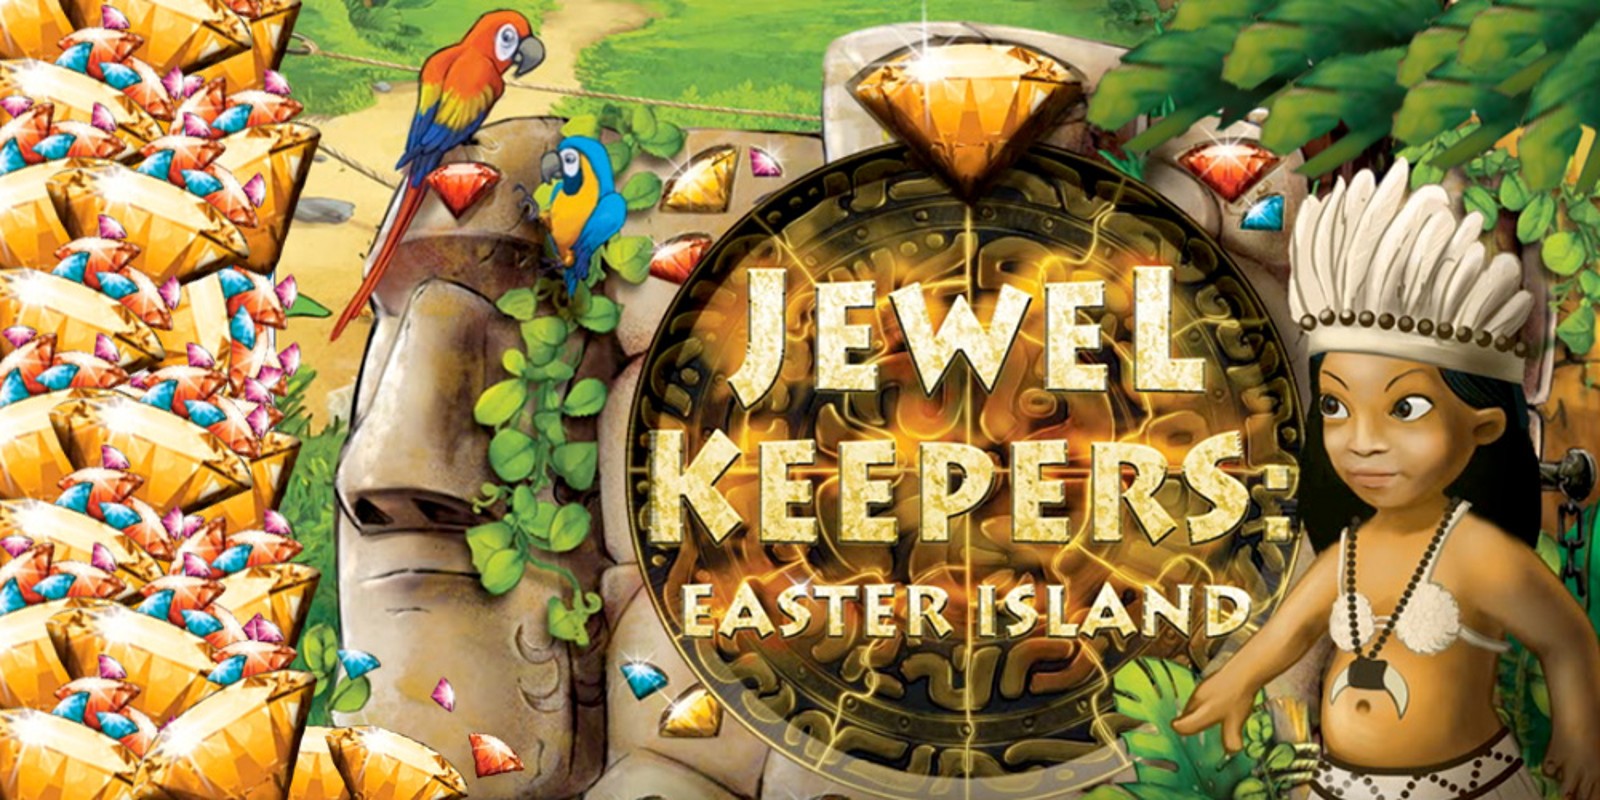 buy jewel keepers easter island